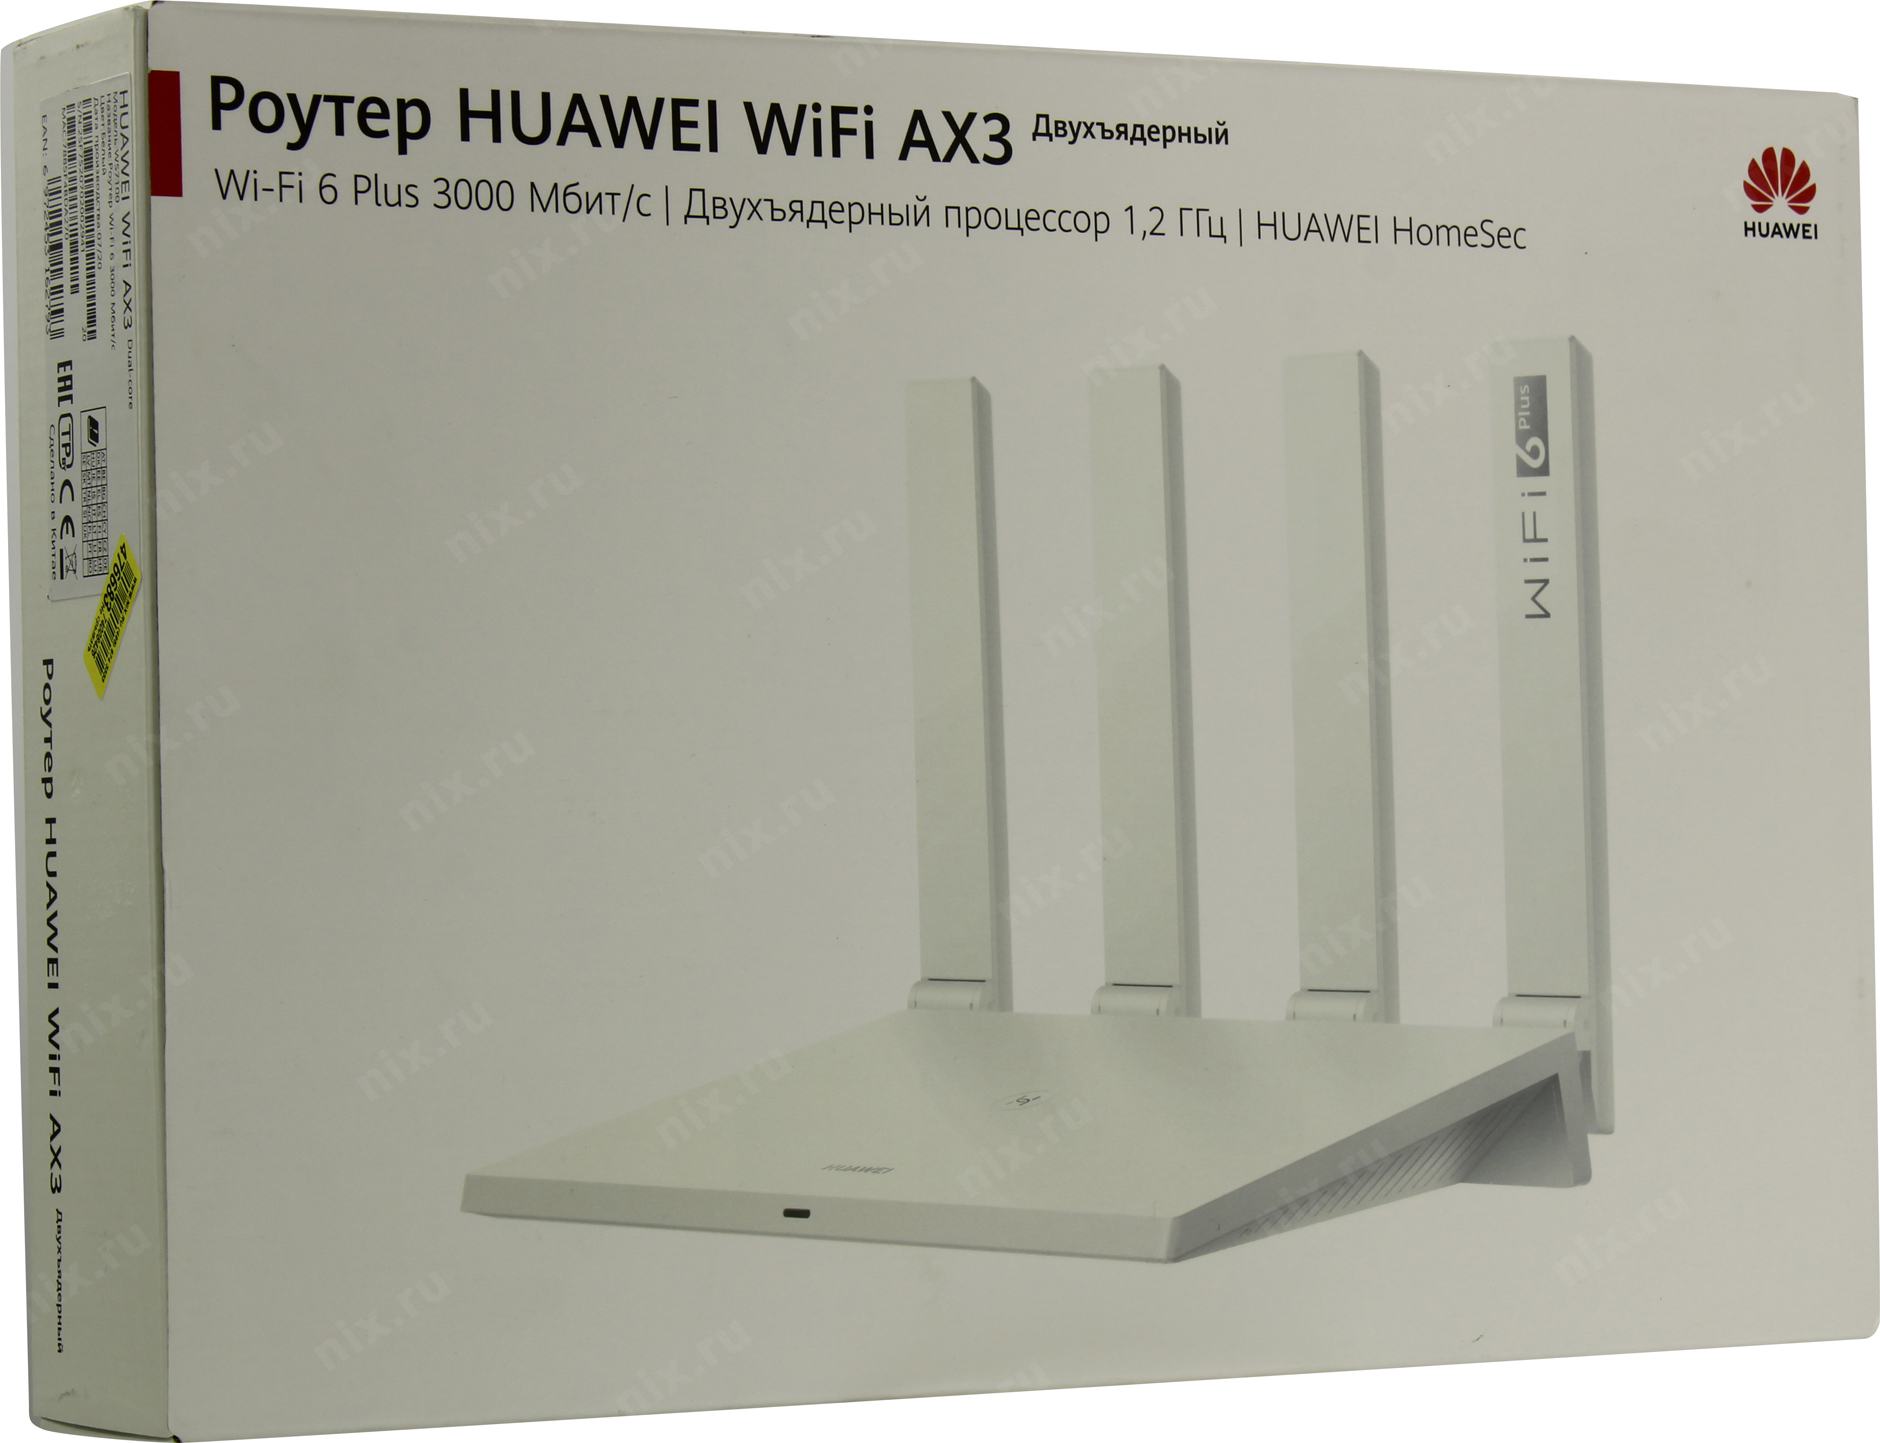 Huawei ax3 купить. Wi-Fi роутер Huawei ws7100. Роутер Huawei WIFI ax3 Dual Core. Wi-Fi роутер Huawei ax3 ws7200. Huawei WIFI ax3 Dual Core ws7100.